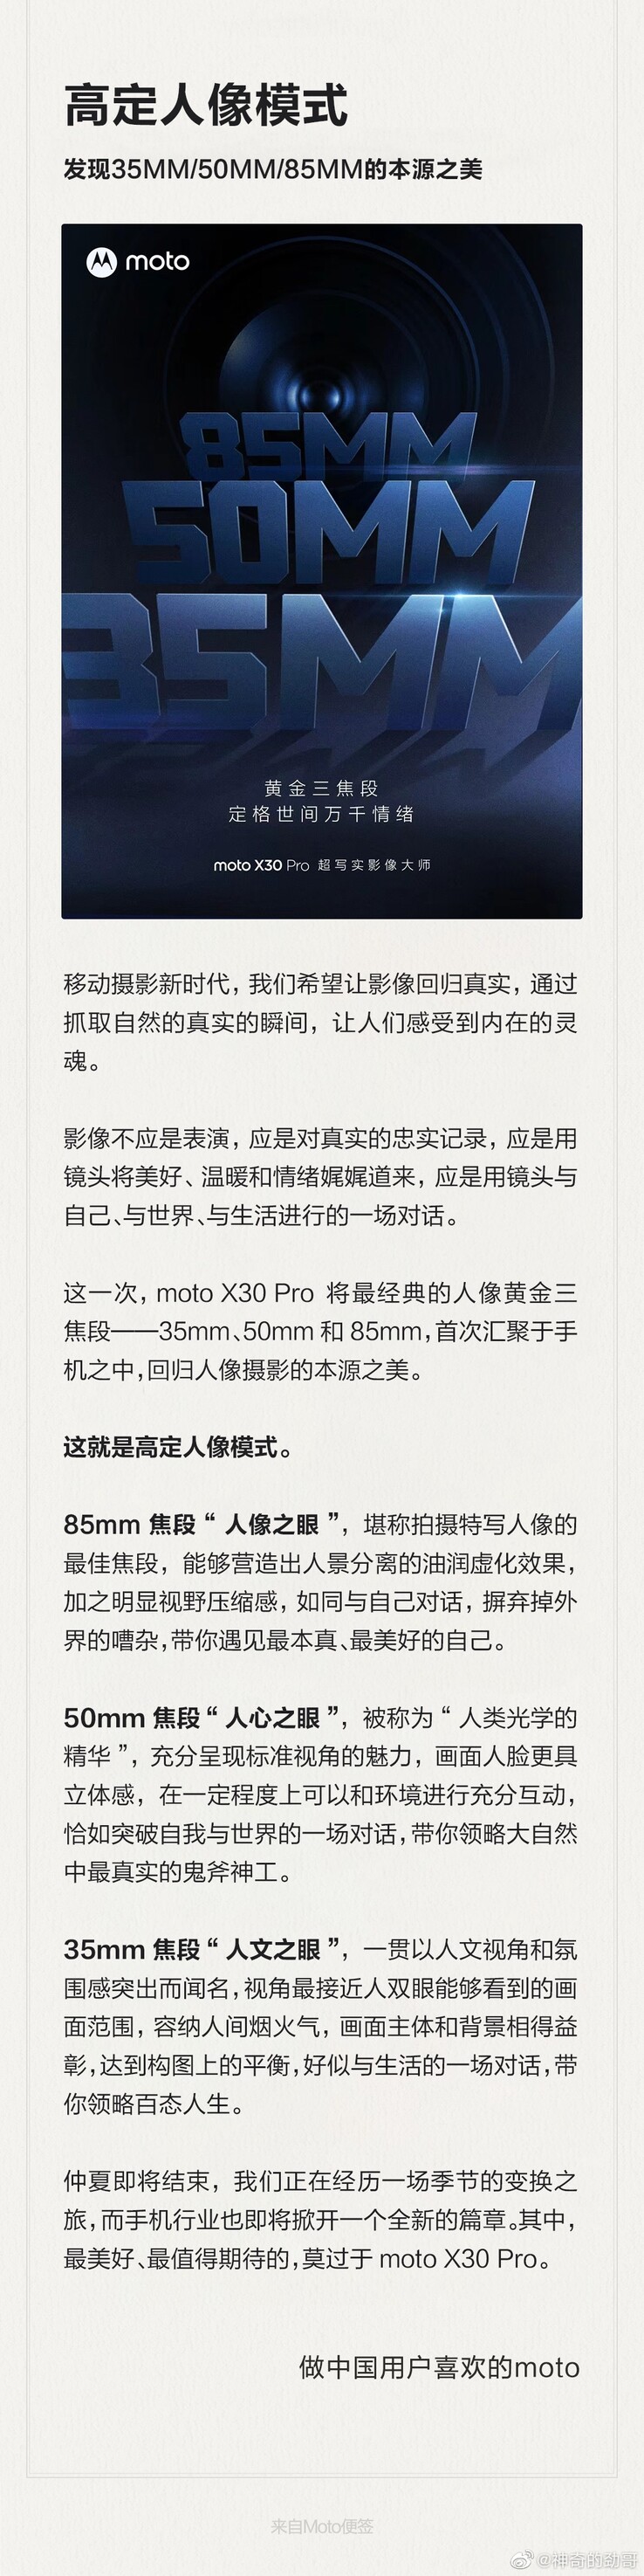 Le teaser complet du Moto X30 Pro de Motorola. (Source : Motorola via Weibo)